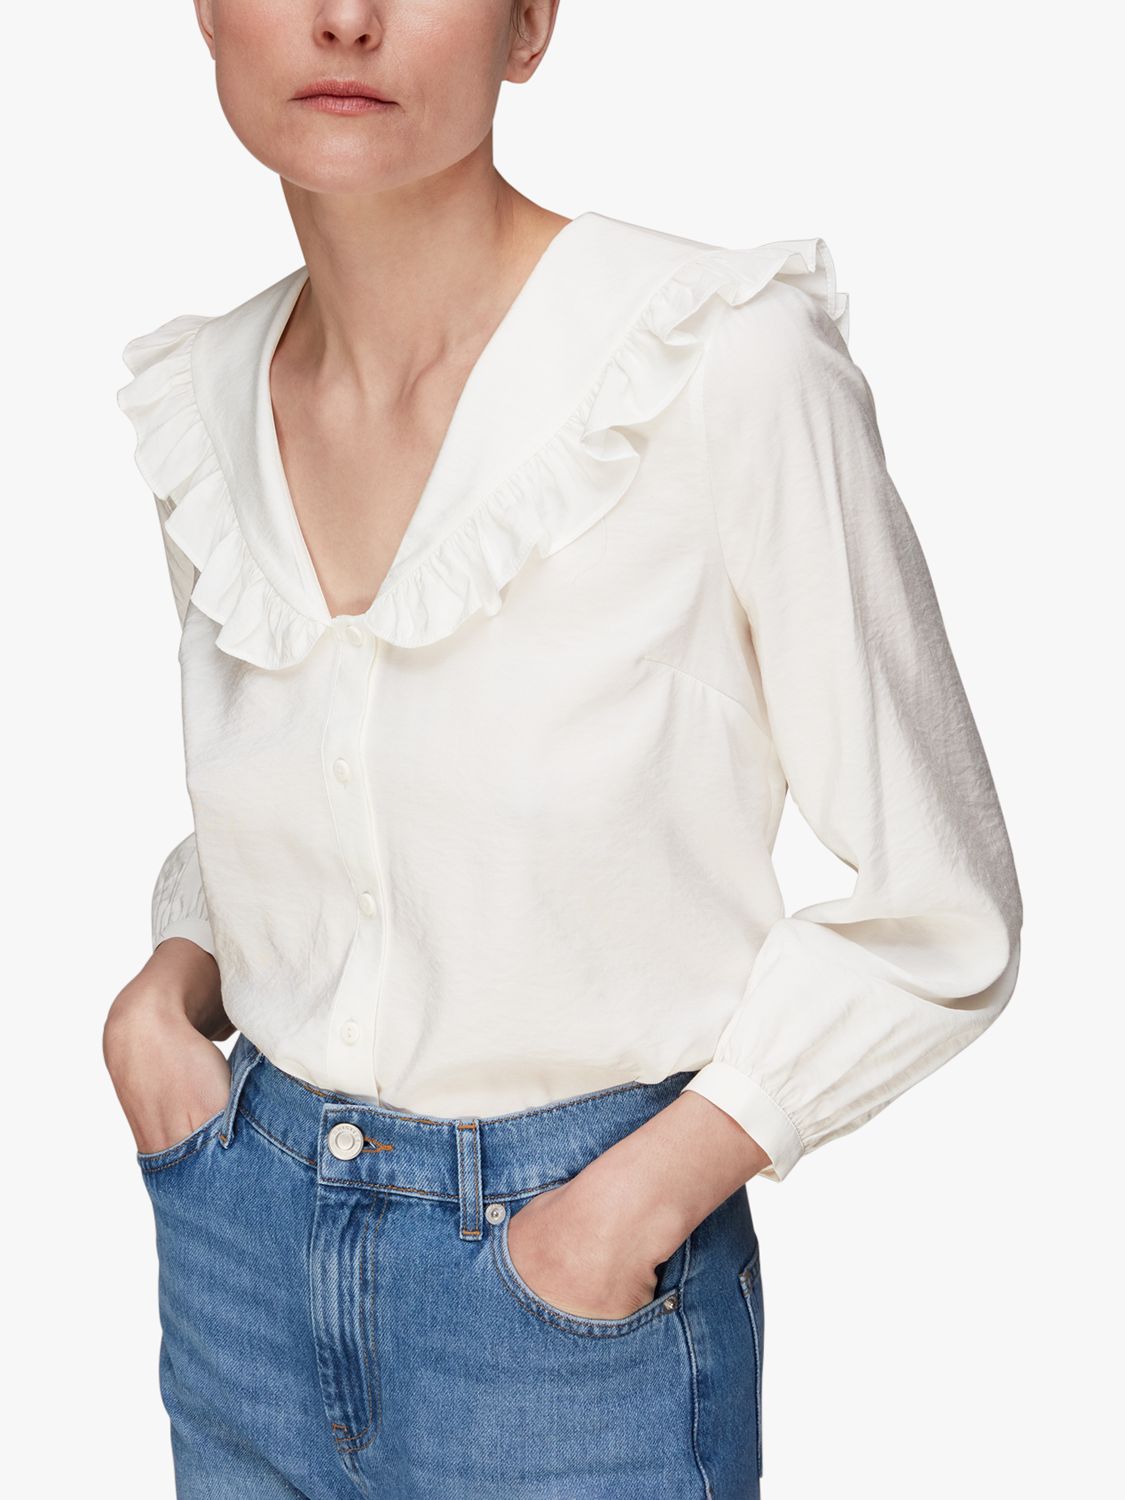 Women's White Long Sleeve Shirts & Tops